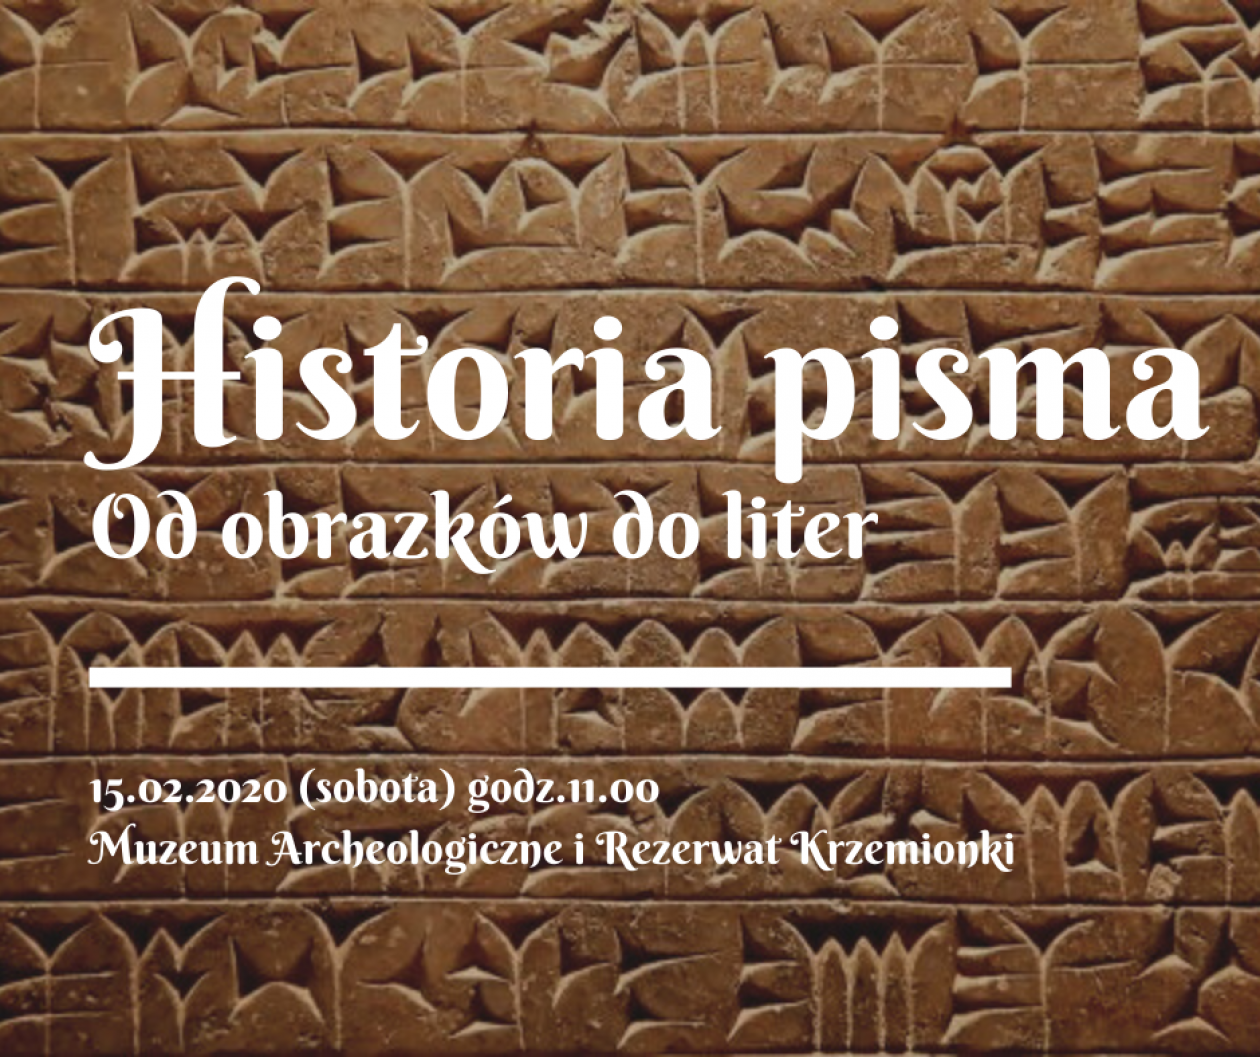 Historia pisma. Od obrazków do liter
